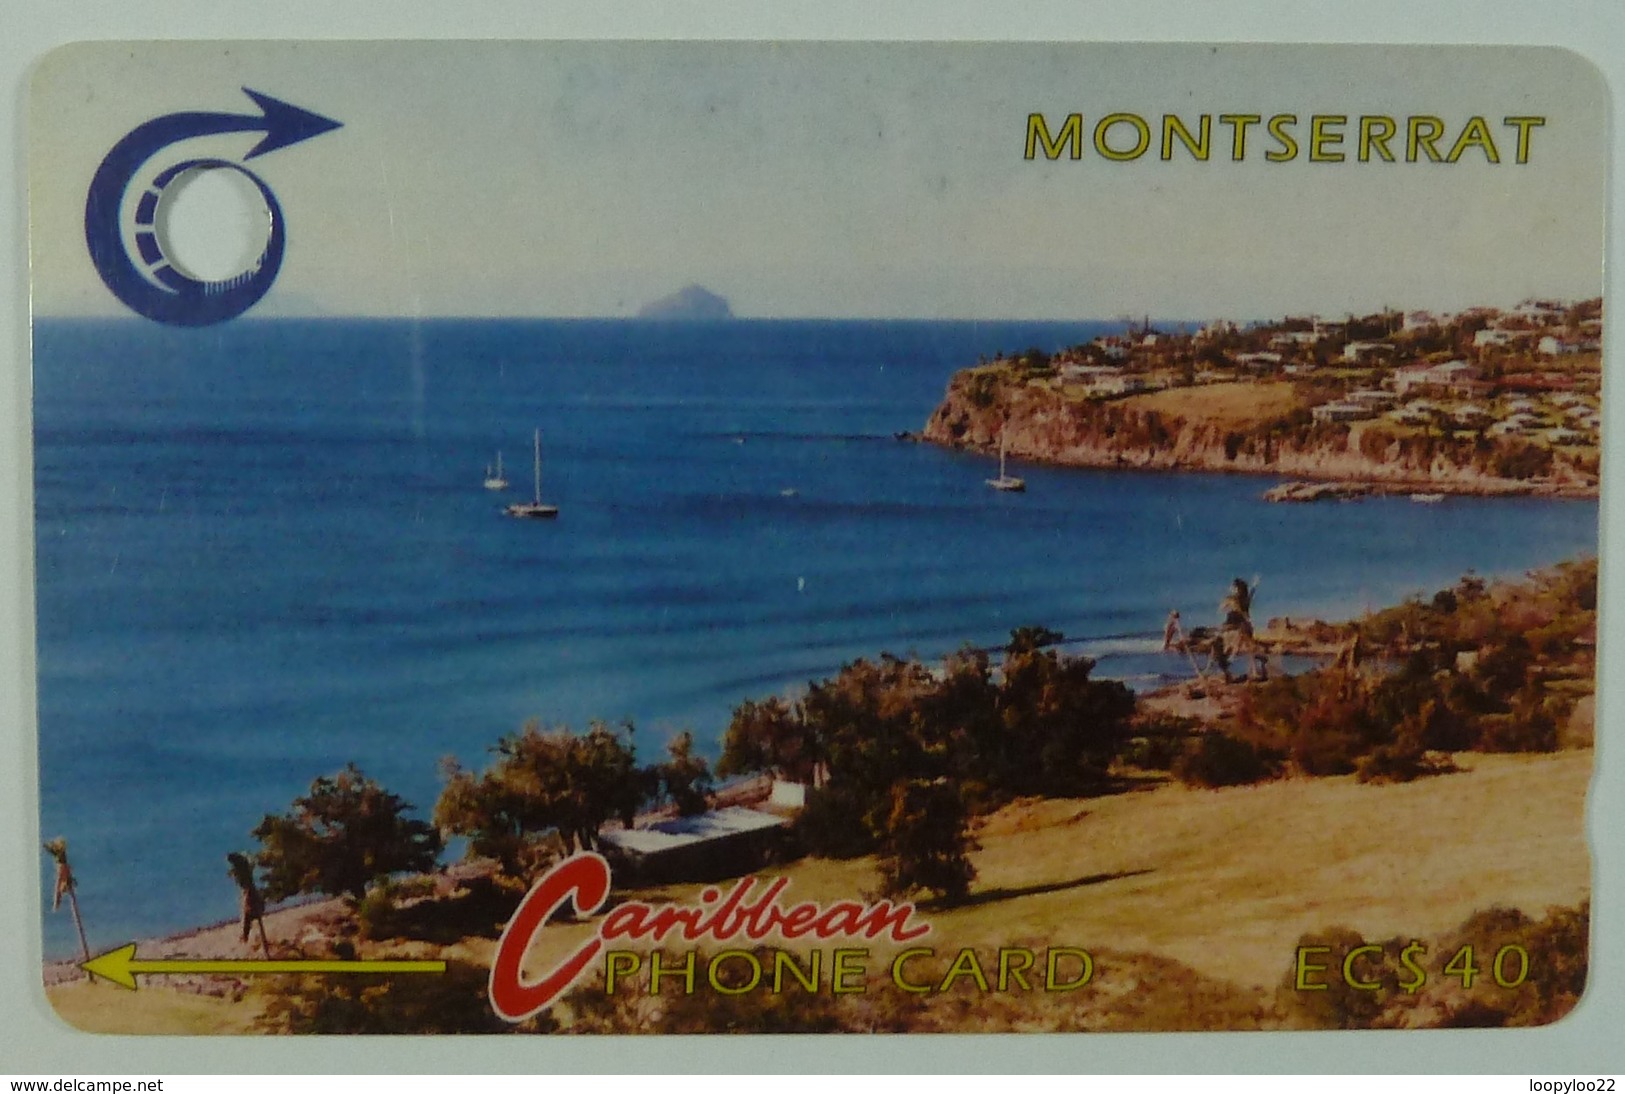 MONTSERRAT - 3CMTC - $40 - MON-3C - Bay With Redonda - 1991 - Used - Montserrat